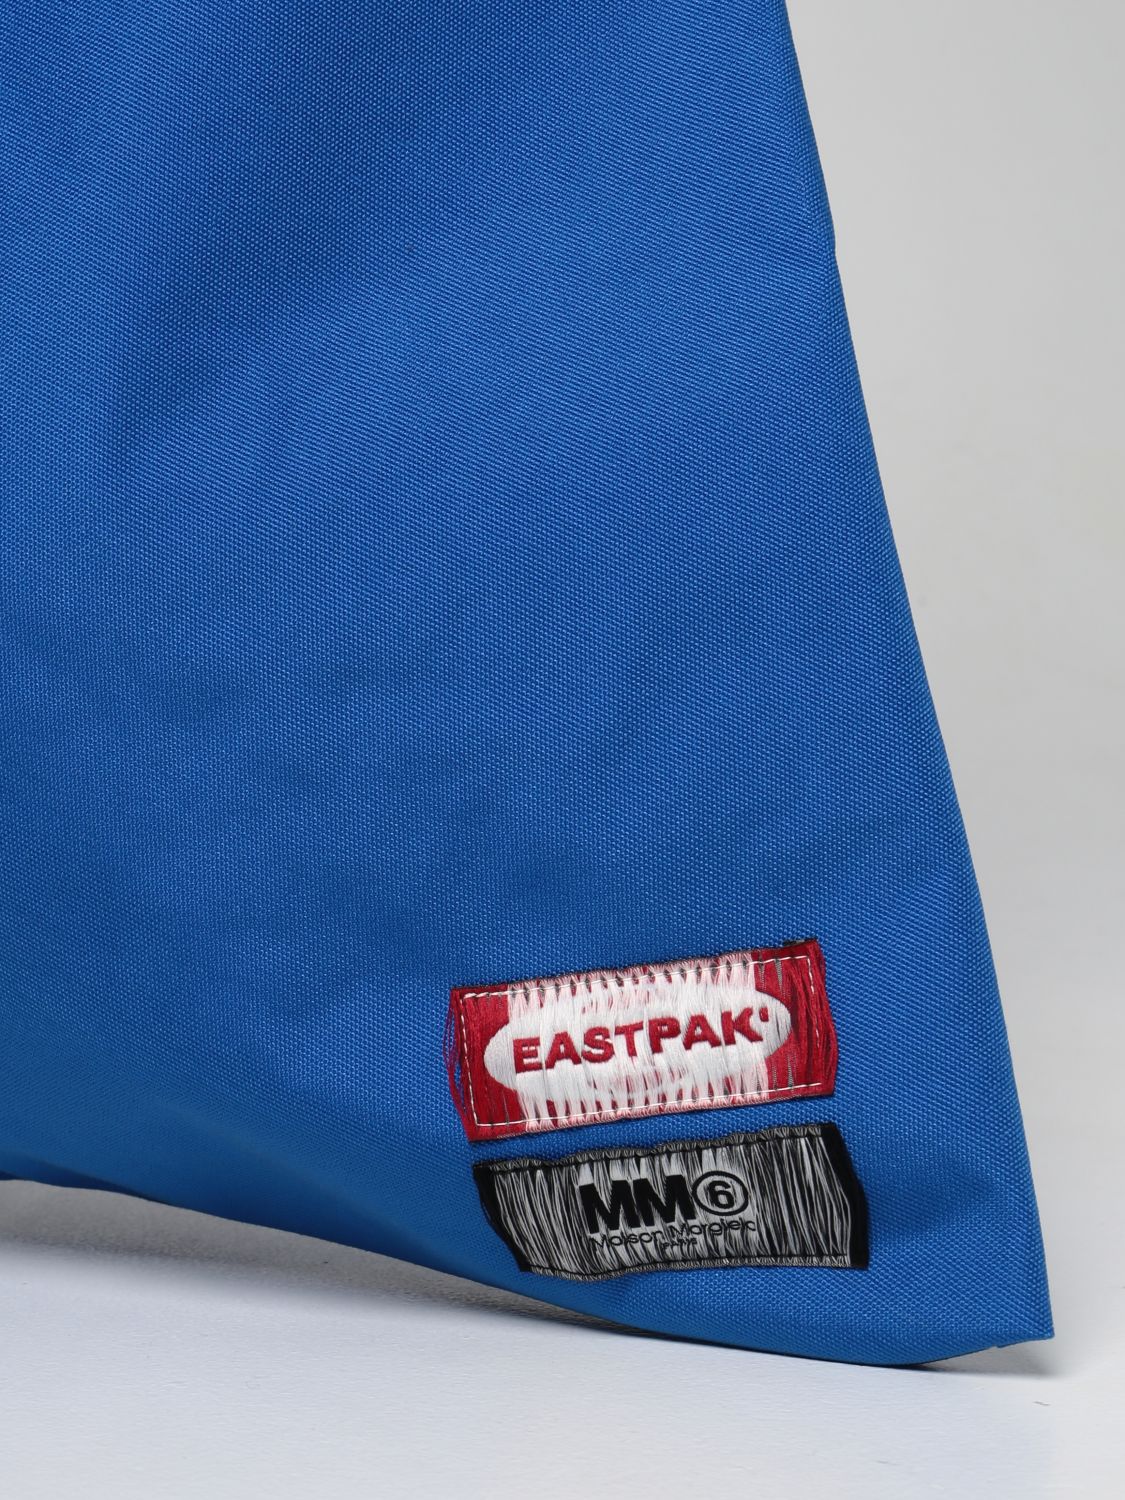 Tasche Eastpak: Tasche herren Eastpak blau 3